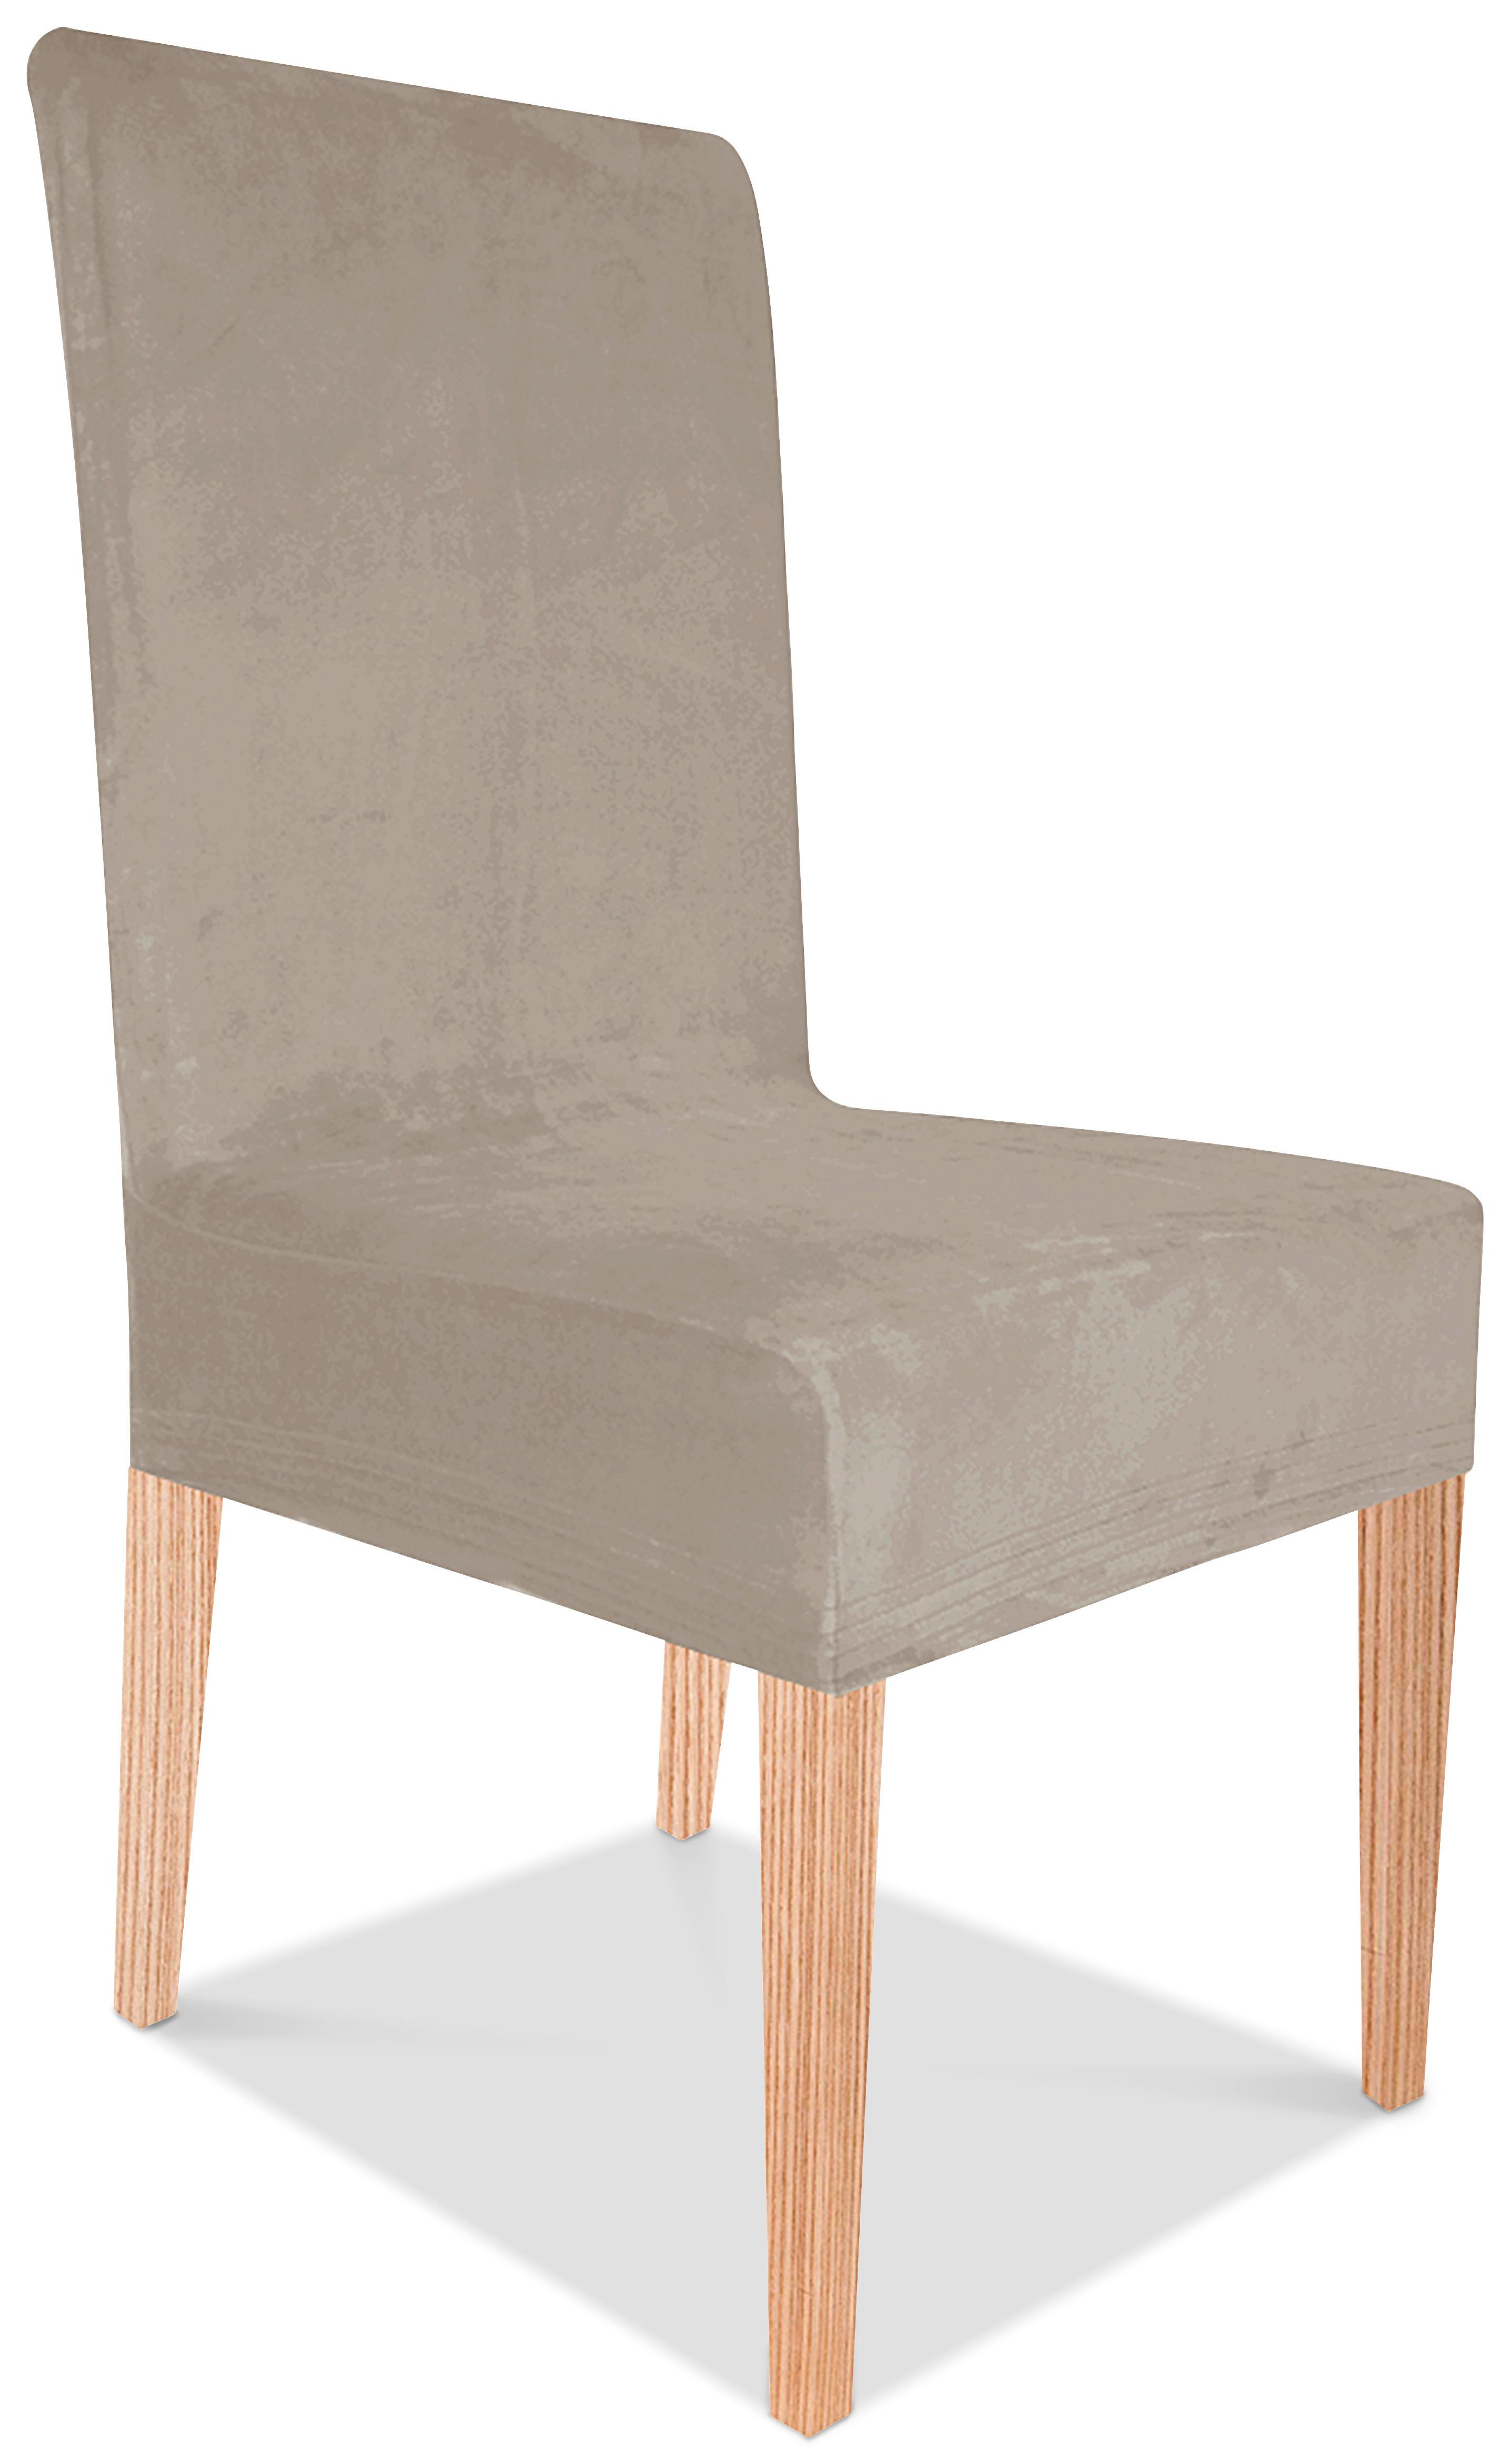 Husă pentru scaun Henry - taupe, Romantik / Landhaus, textil (40/65/45cm) - Modern Living